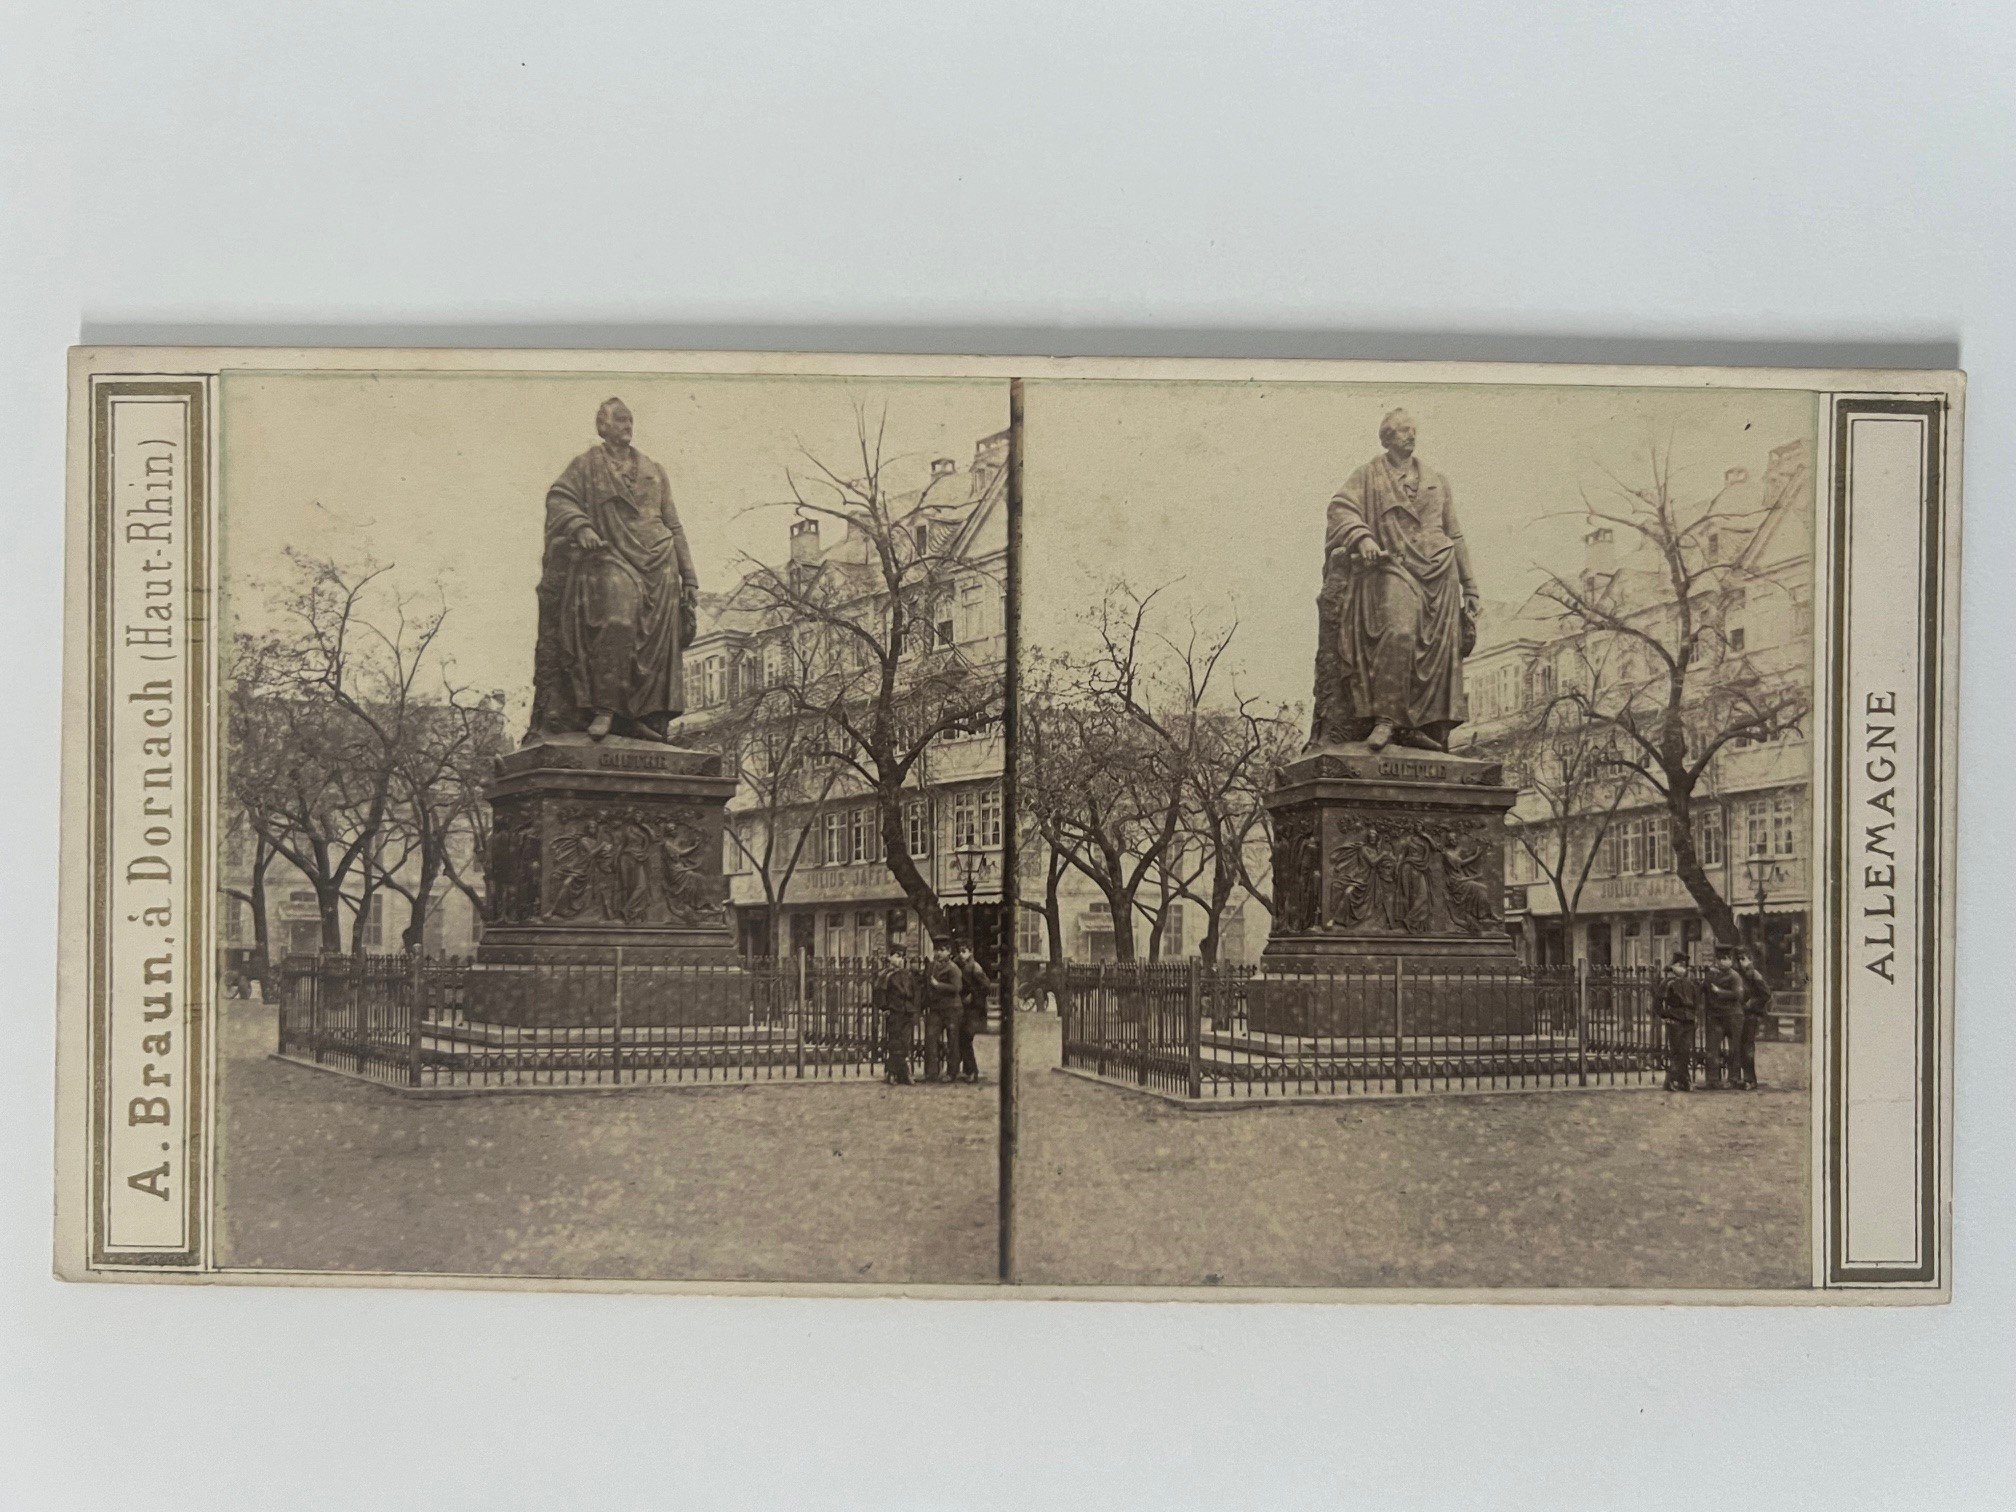 Stereobild, Adolphe Braun, Frankfurt, Nr. 2452, Das Goethe-Denkmal, ca. 1865. (Taunus-Rhein-Main - Regionalgeschichtliche Sammlung Dr. Stefan Naas CC BY-NC-SA)